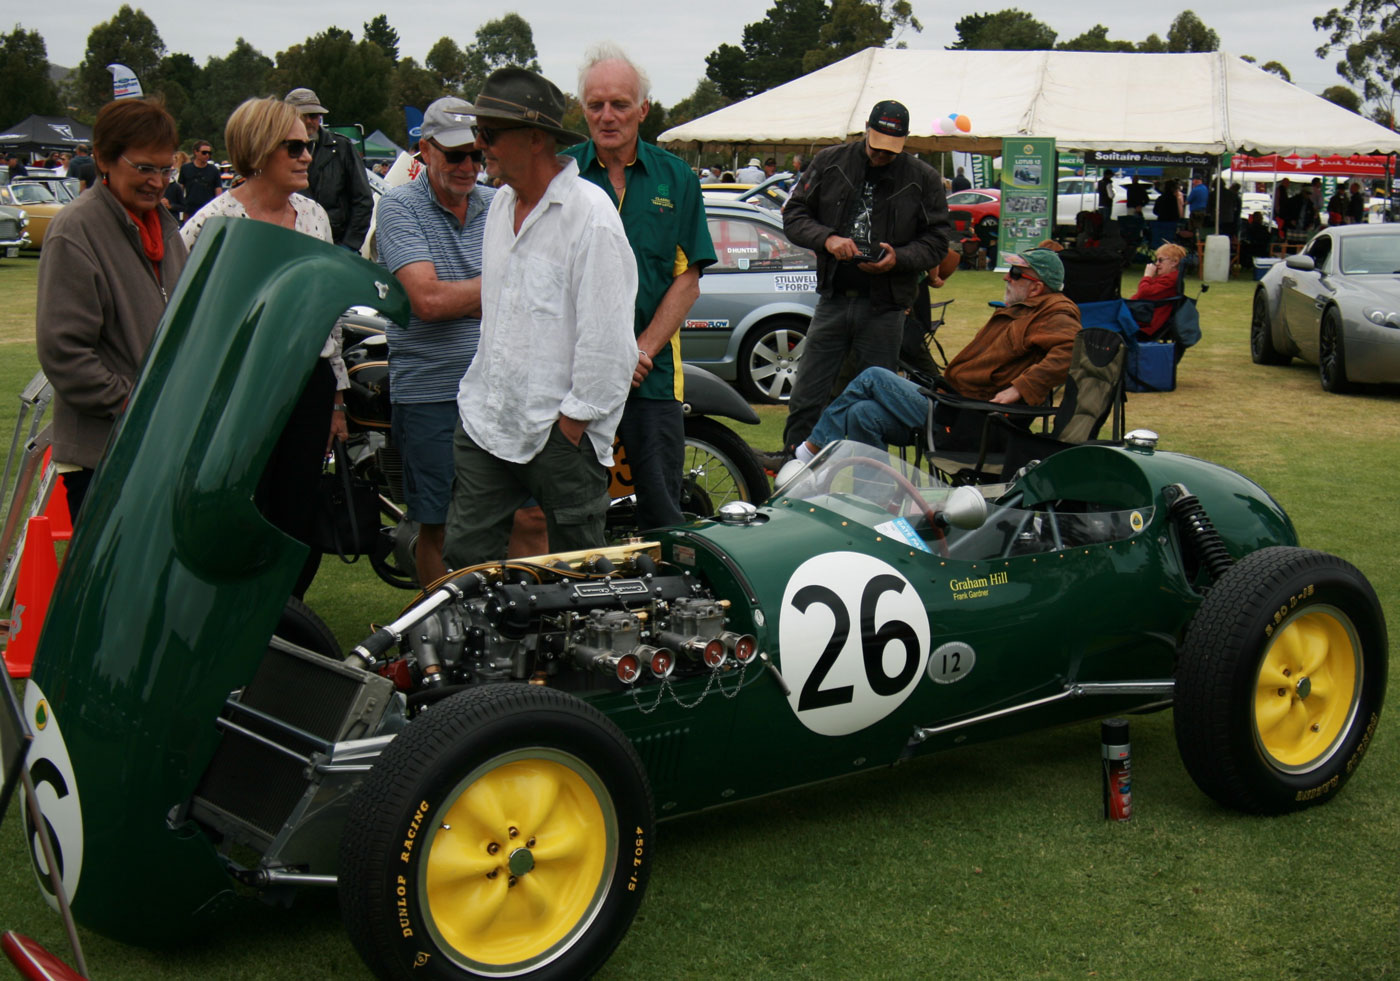 The ex-Graham Hill Monaco GP Lotus 12 highlighted Lotus Motorsport heritage